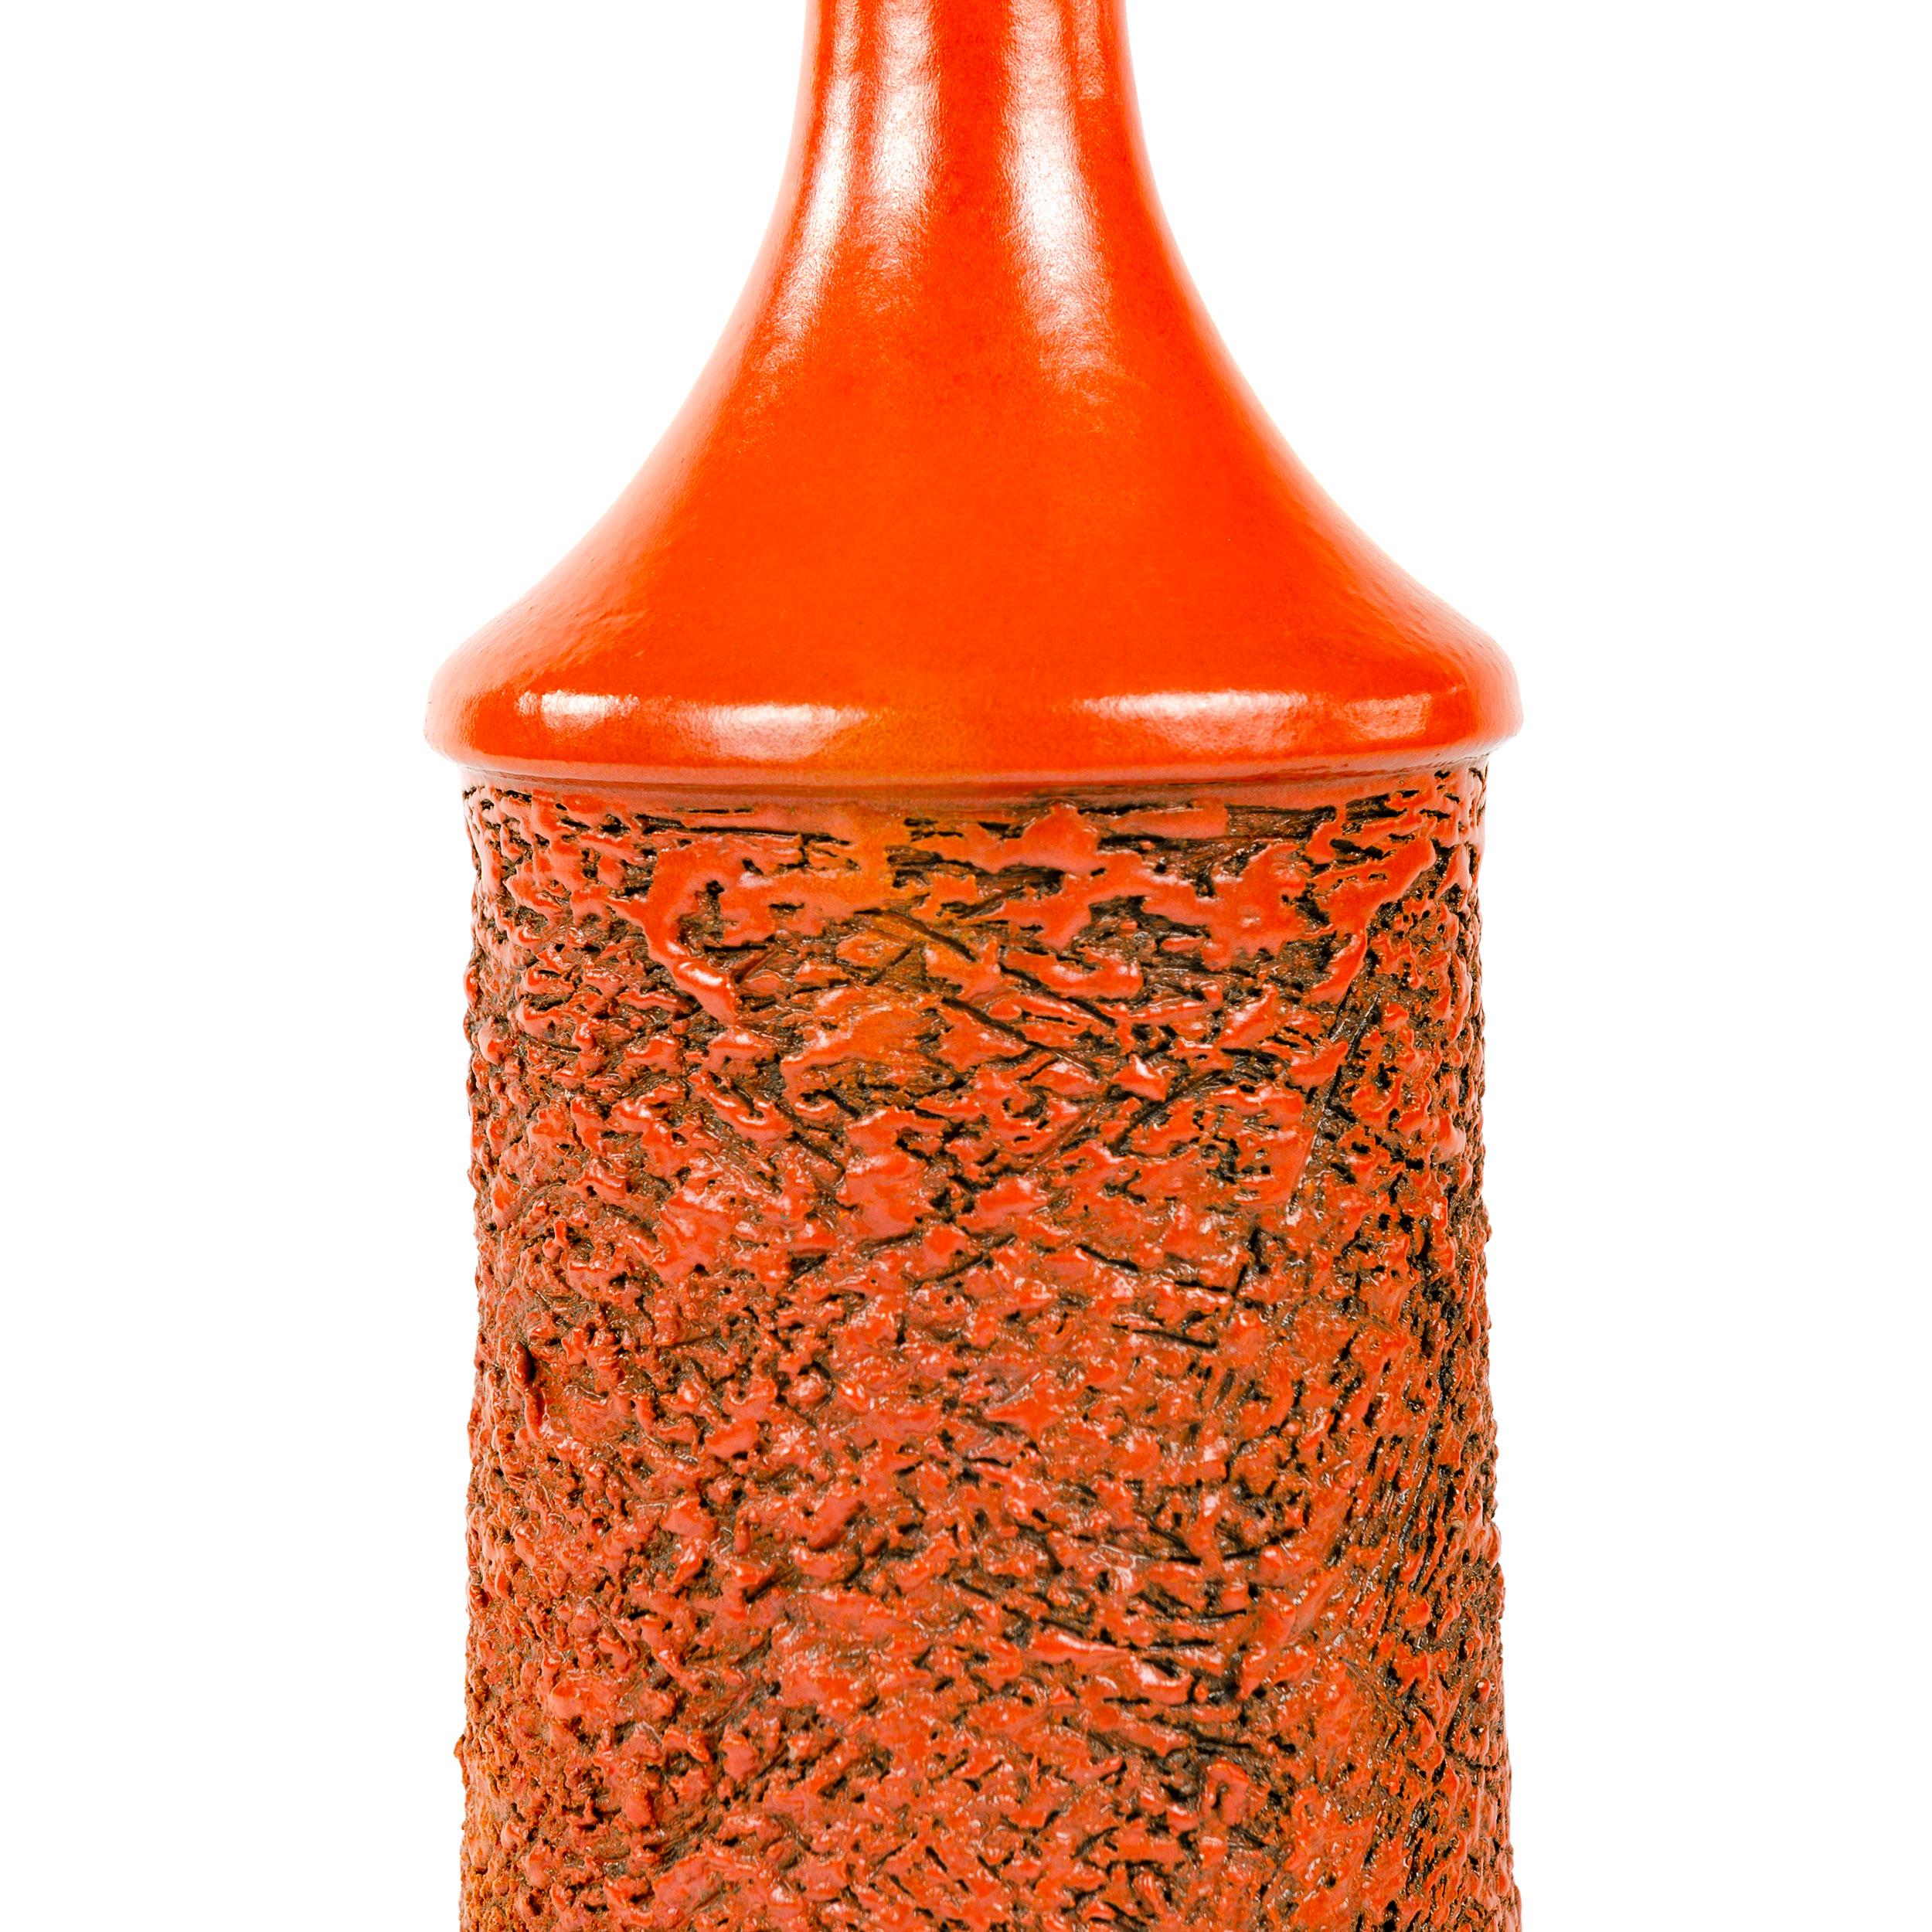 American 1970s Red-Orange Ceramic Table Lamp by Lee Rosen for Design Technics For Sale